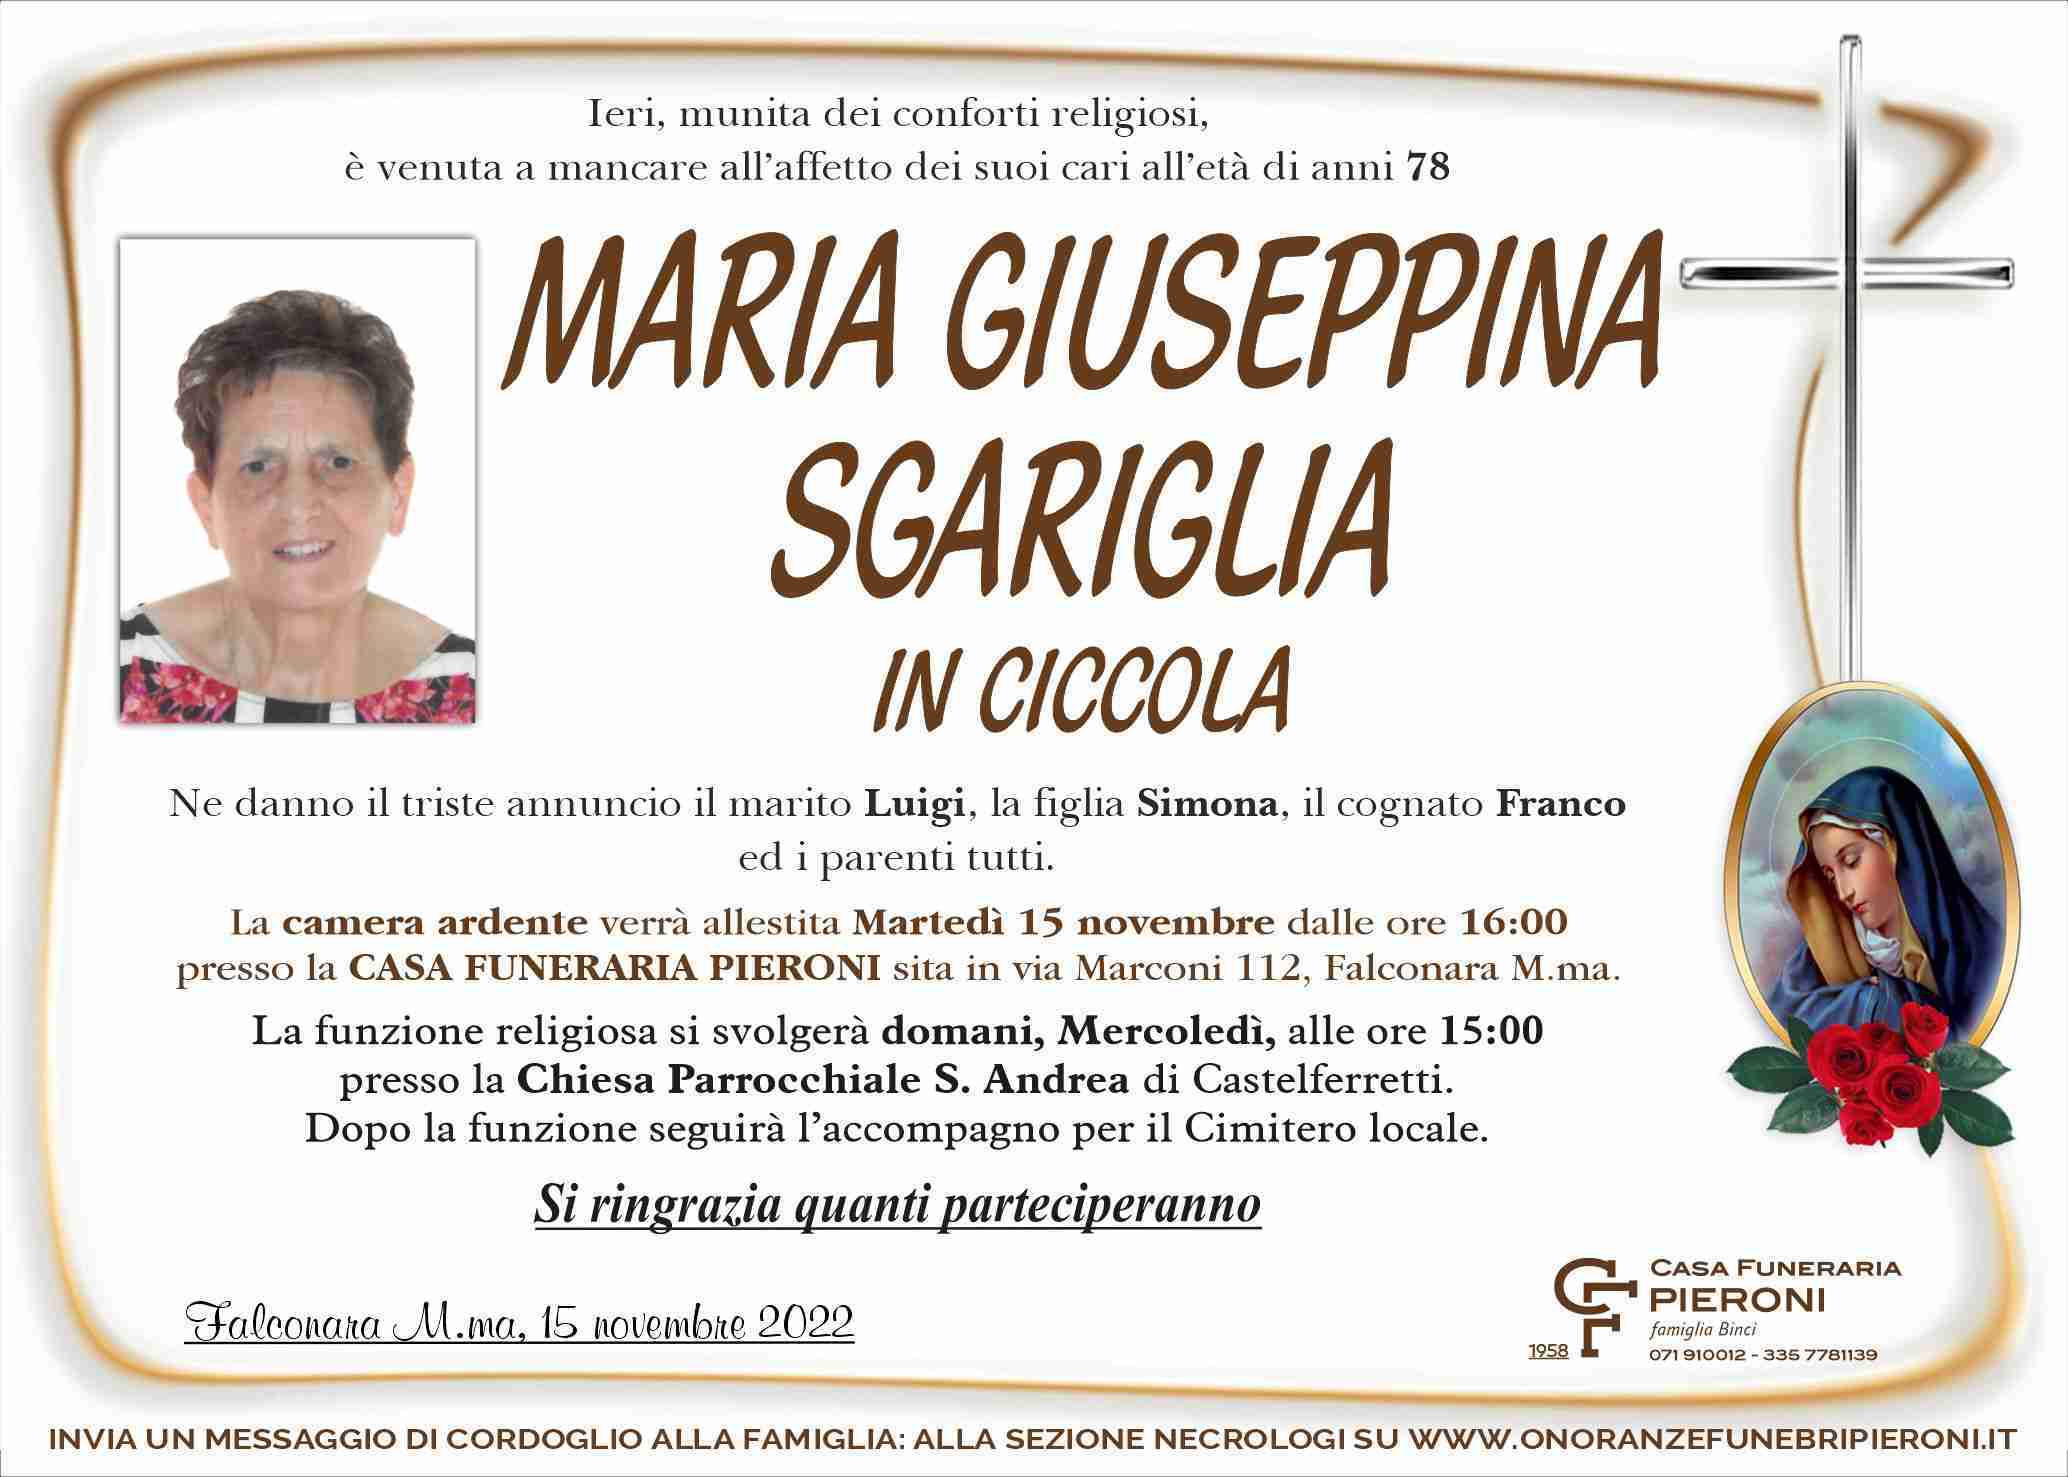 Maria Giuseppina Sgariglia